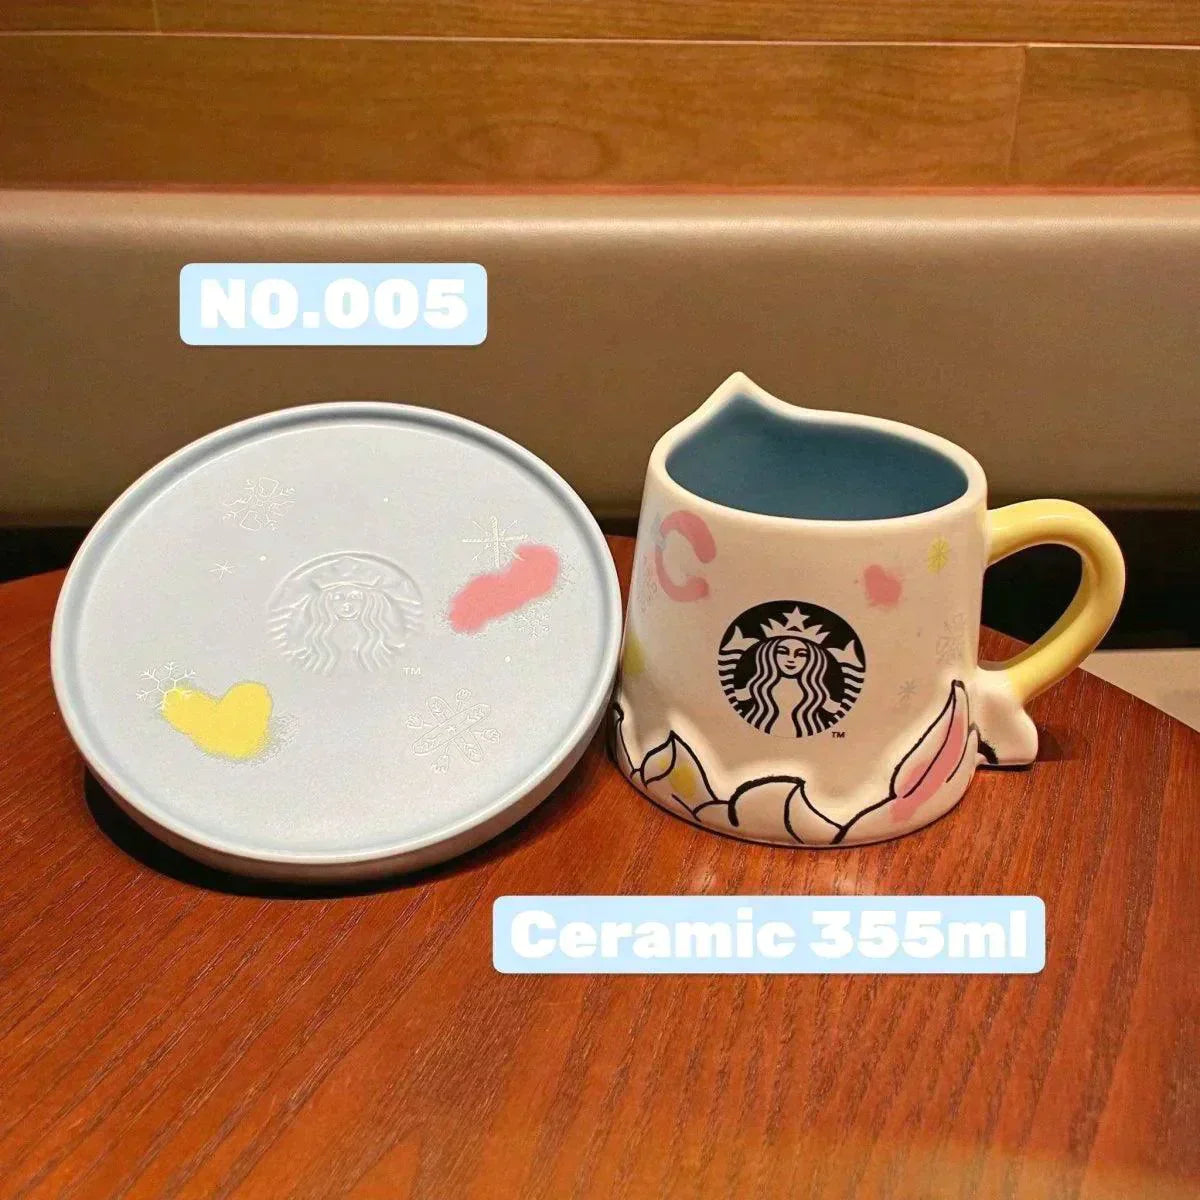 The Most Magical Mug and Coaster Set of 2021